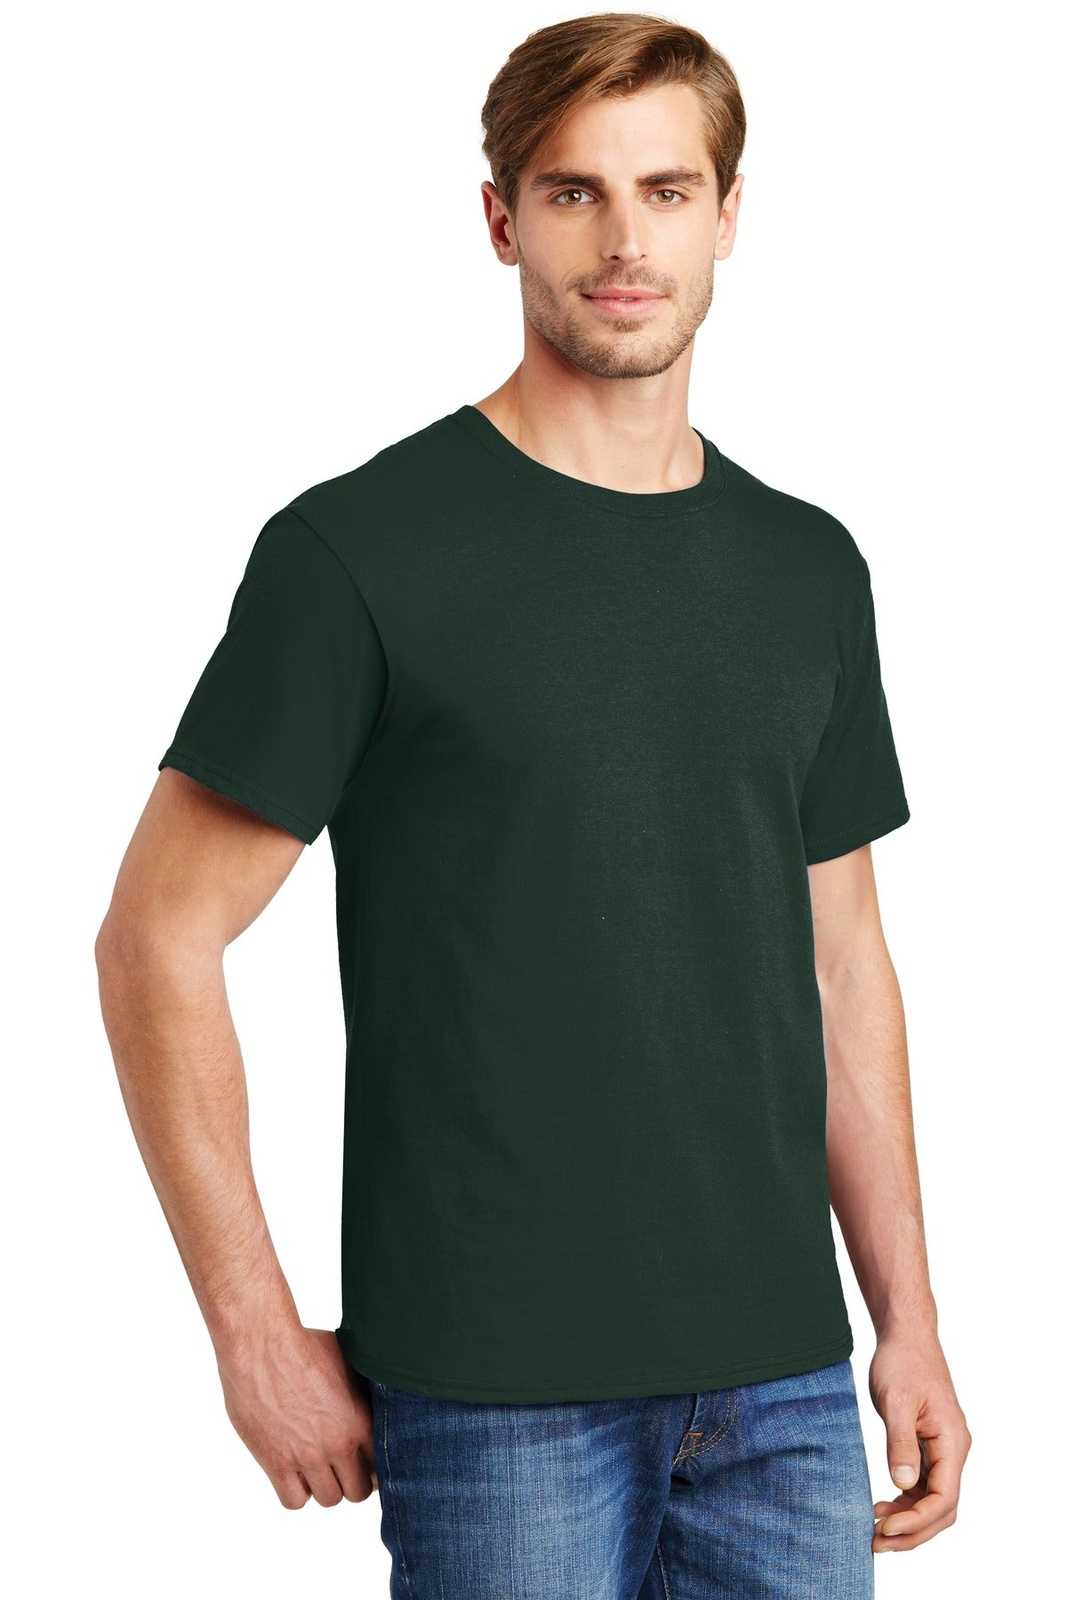 Hanes 5280 Comfortsoft 100% Cotton T-Shirt - Deep Forest - HIT a Double